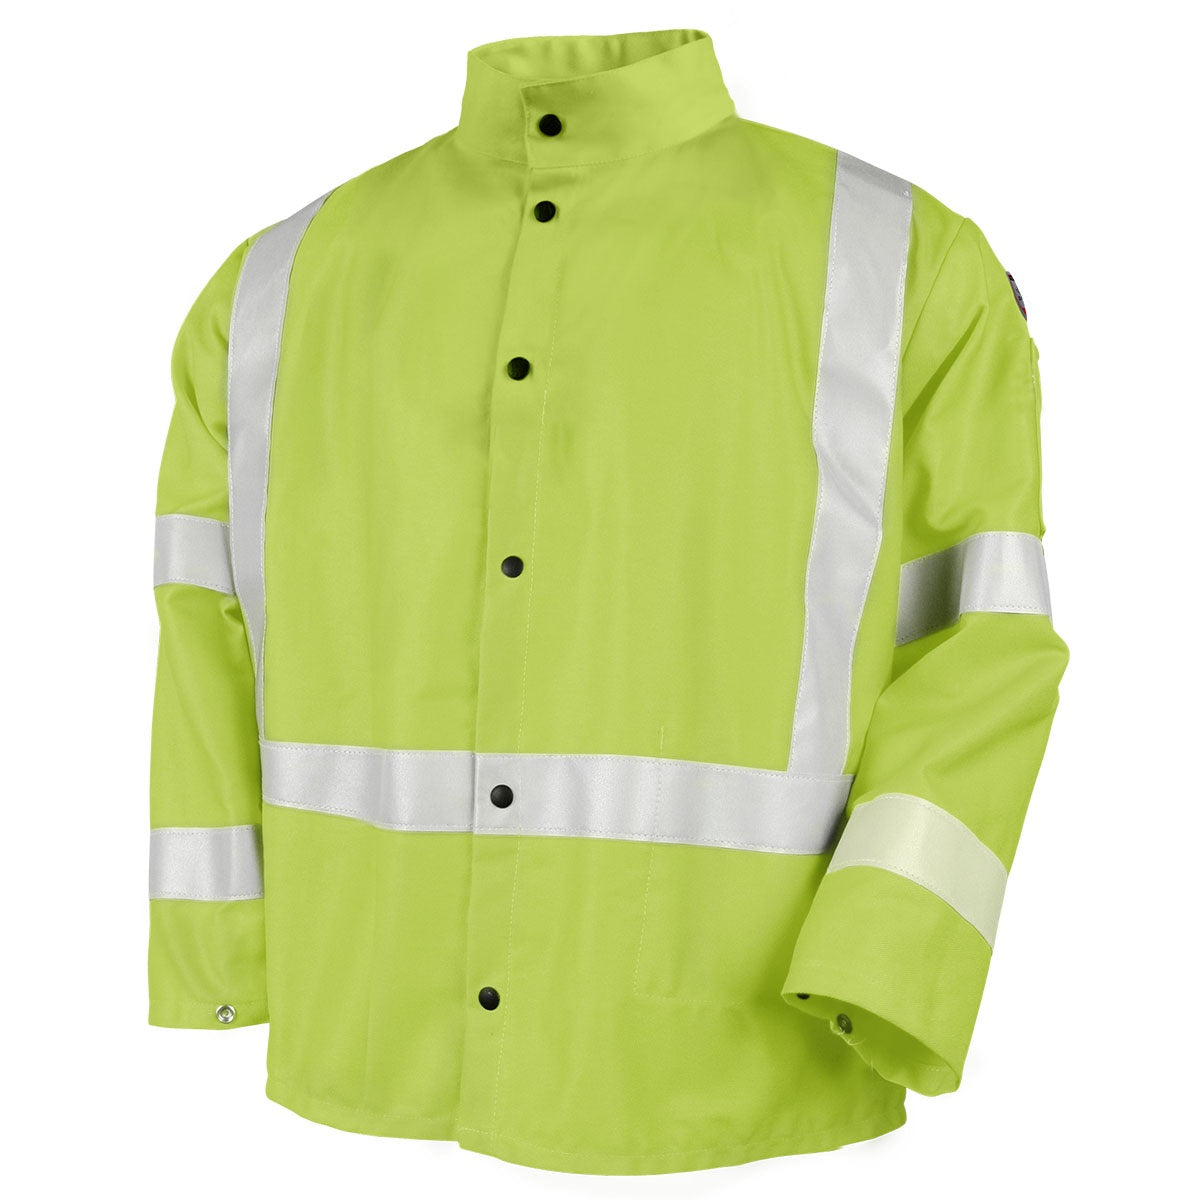 Revco Black Stallion 9oz Lime Safety Welding Jacket w/FR Reflective Tape (JF1012-LM)